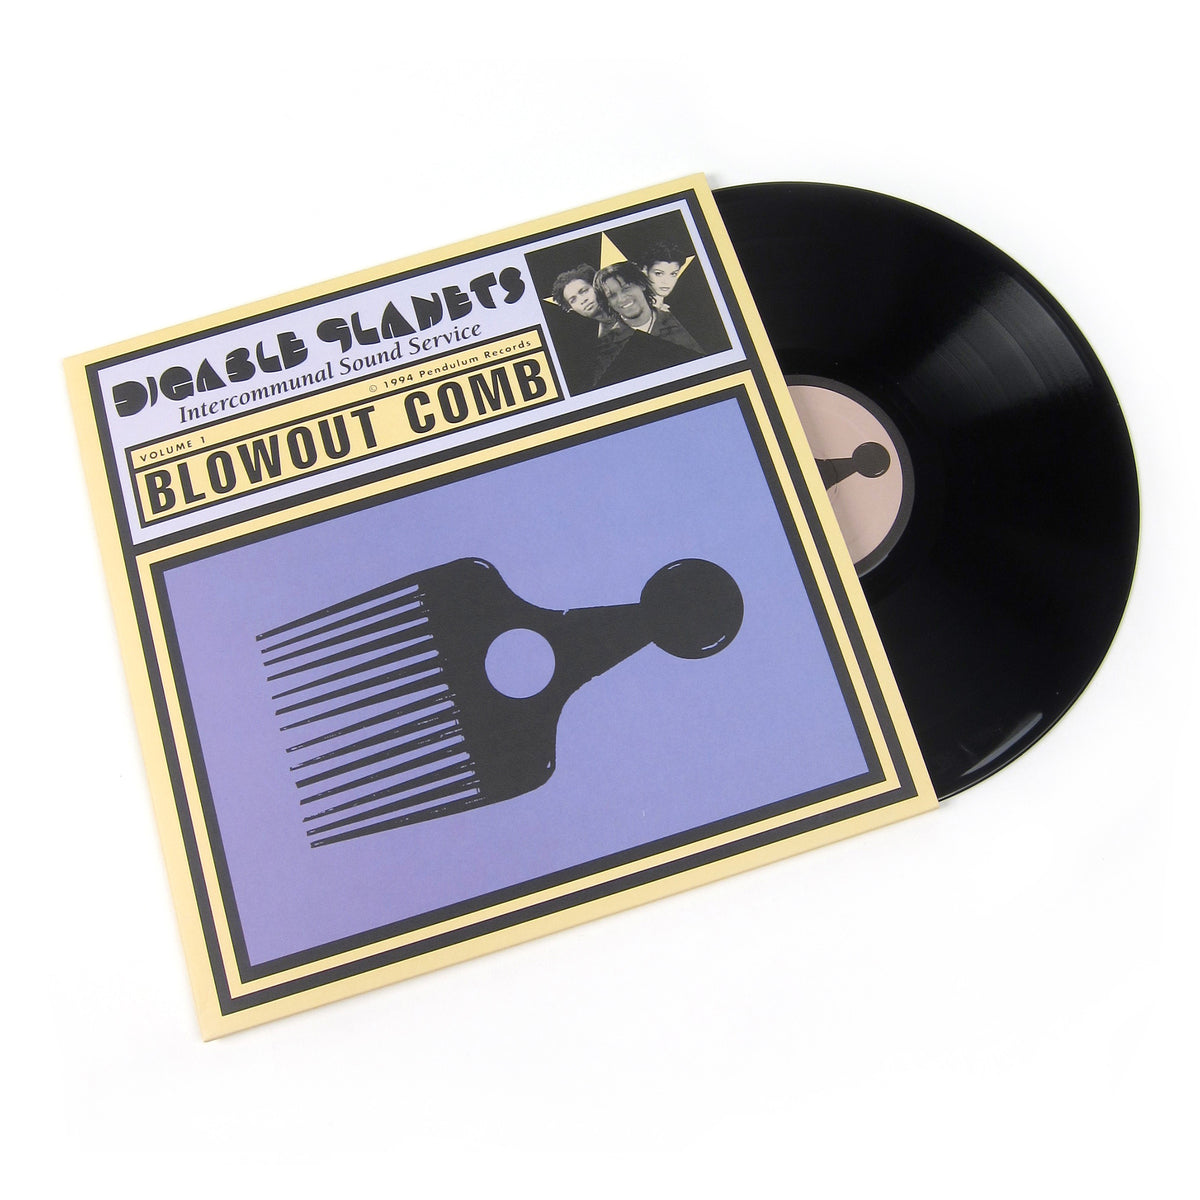 Digable Planets: Blowout Comb Vinyl 2LP — TurntableLab.com